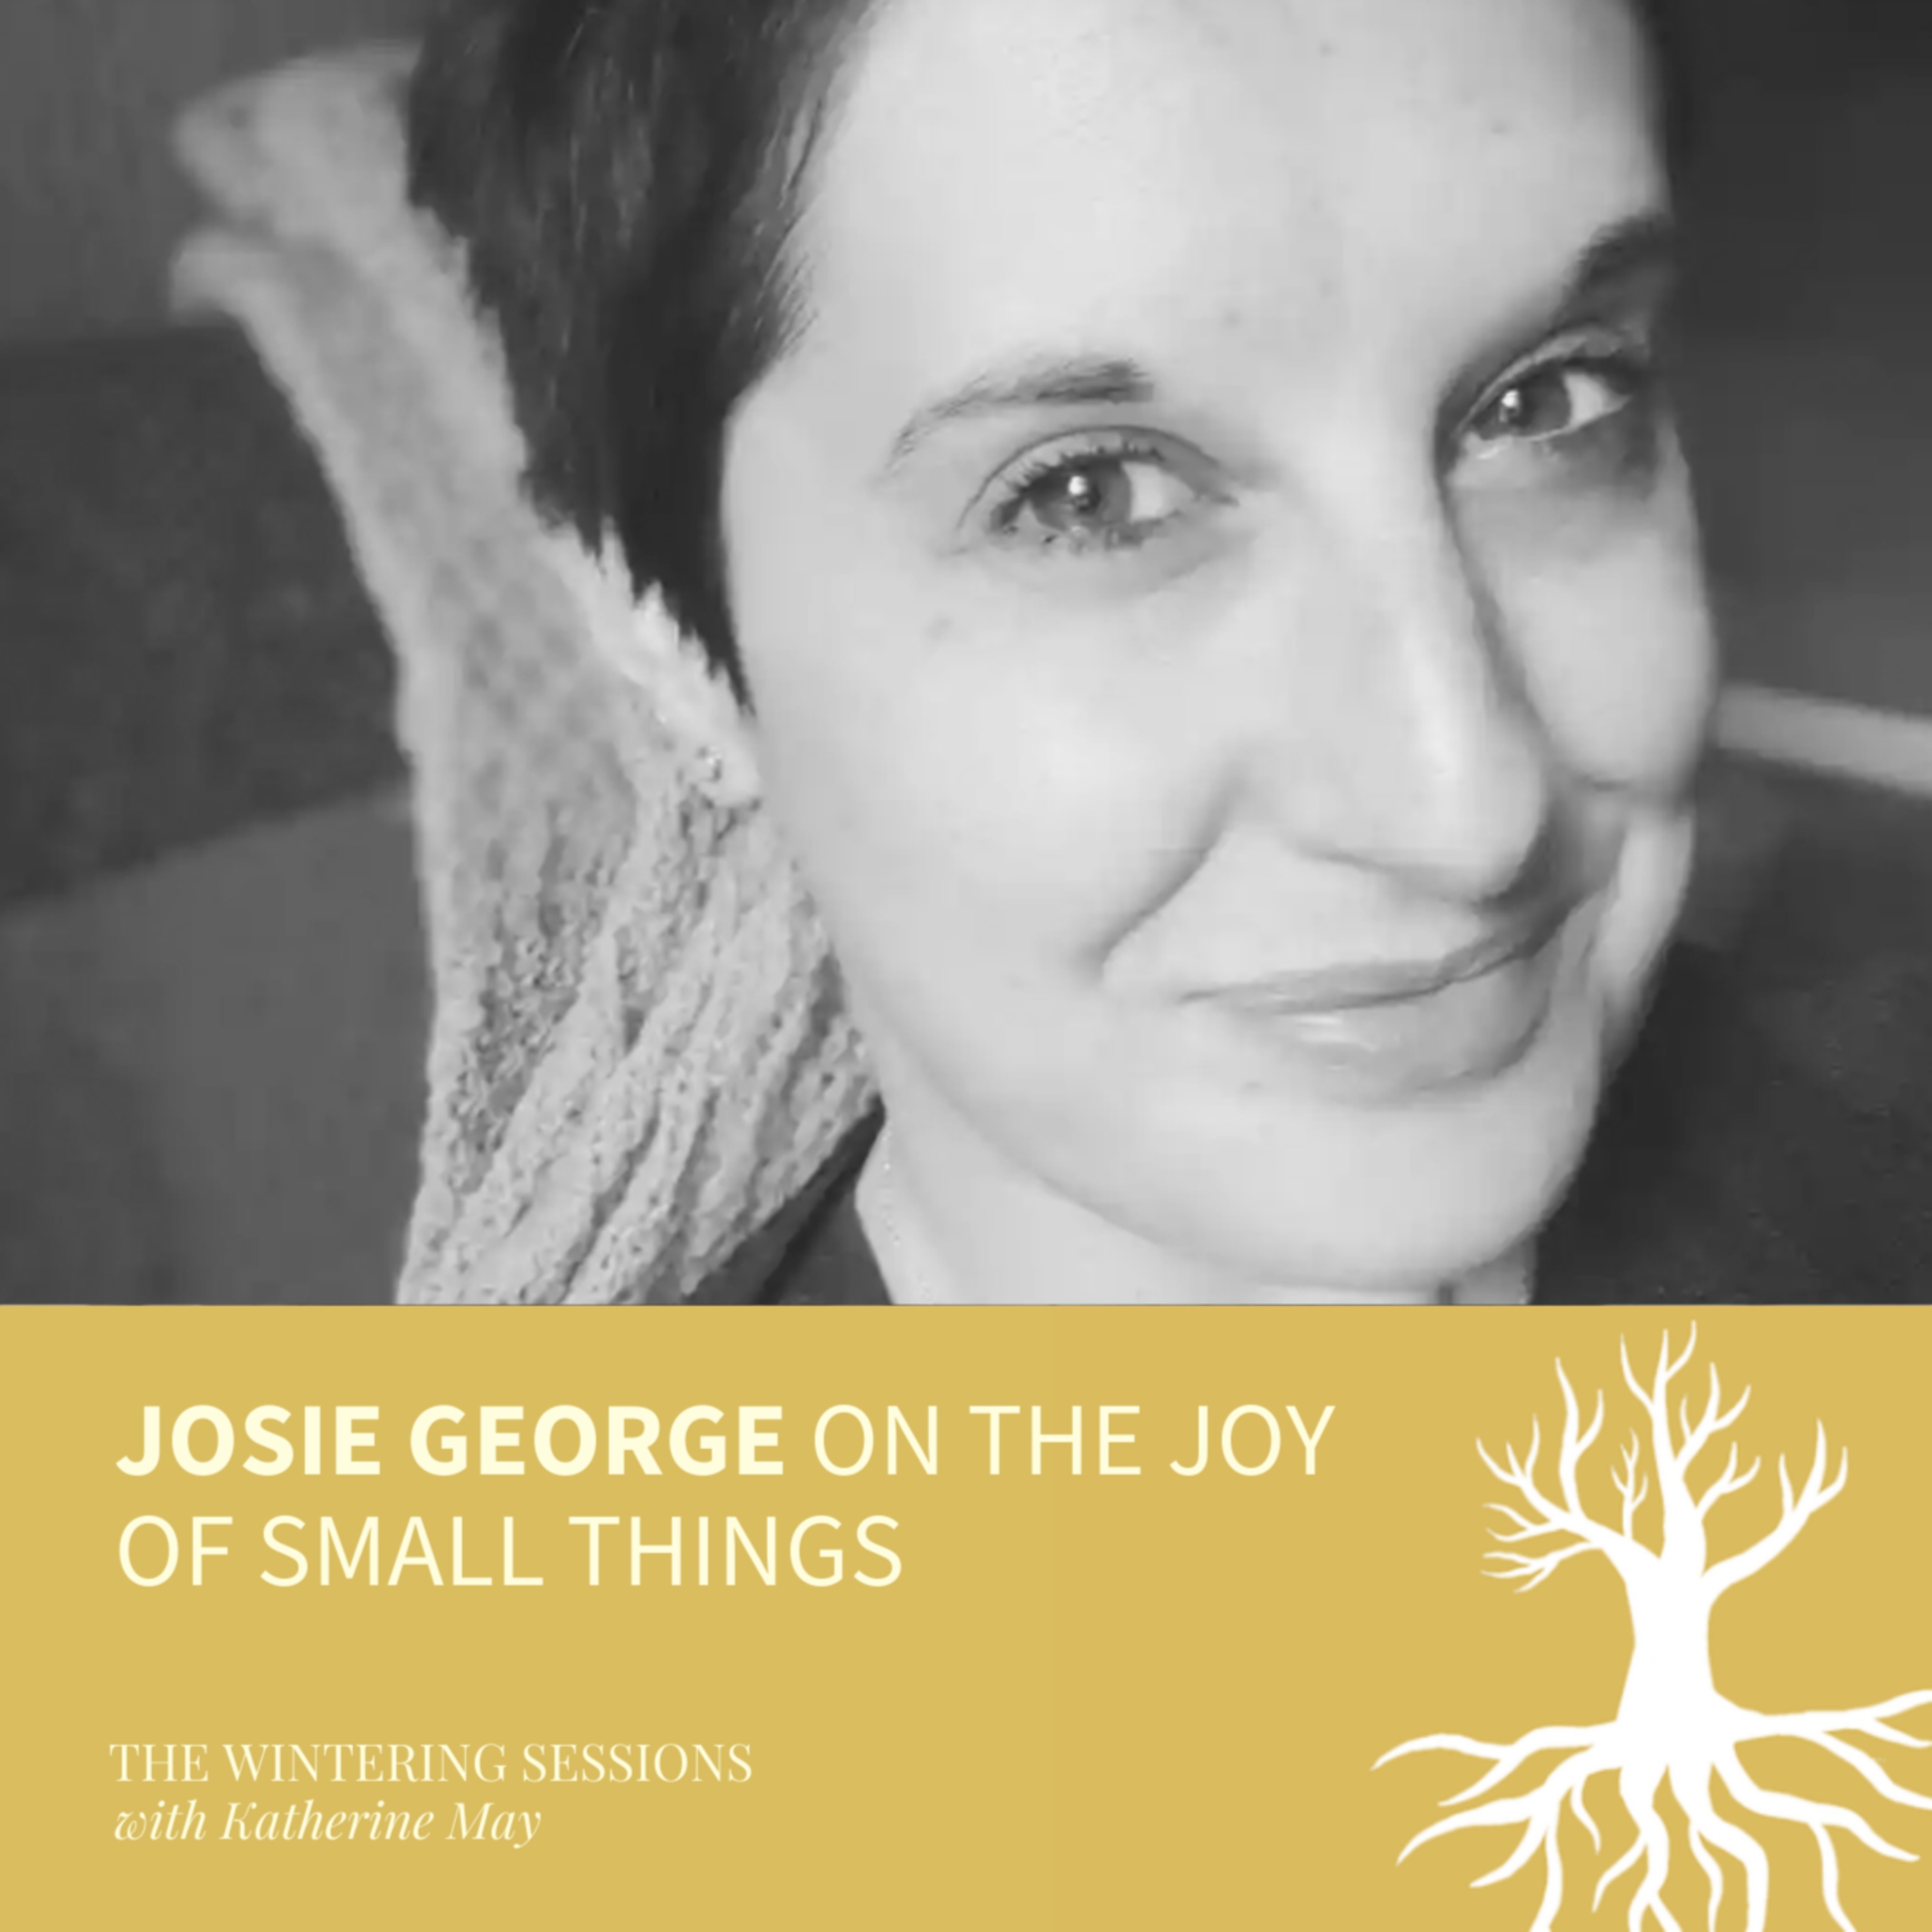 Josie George on the joy of small things